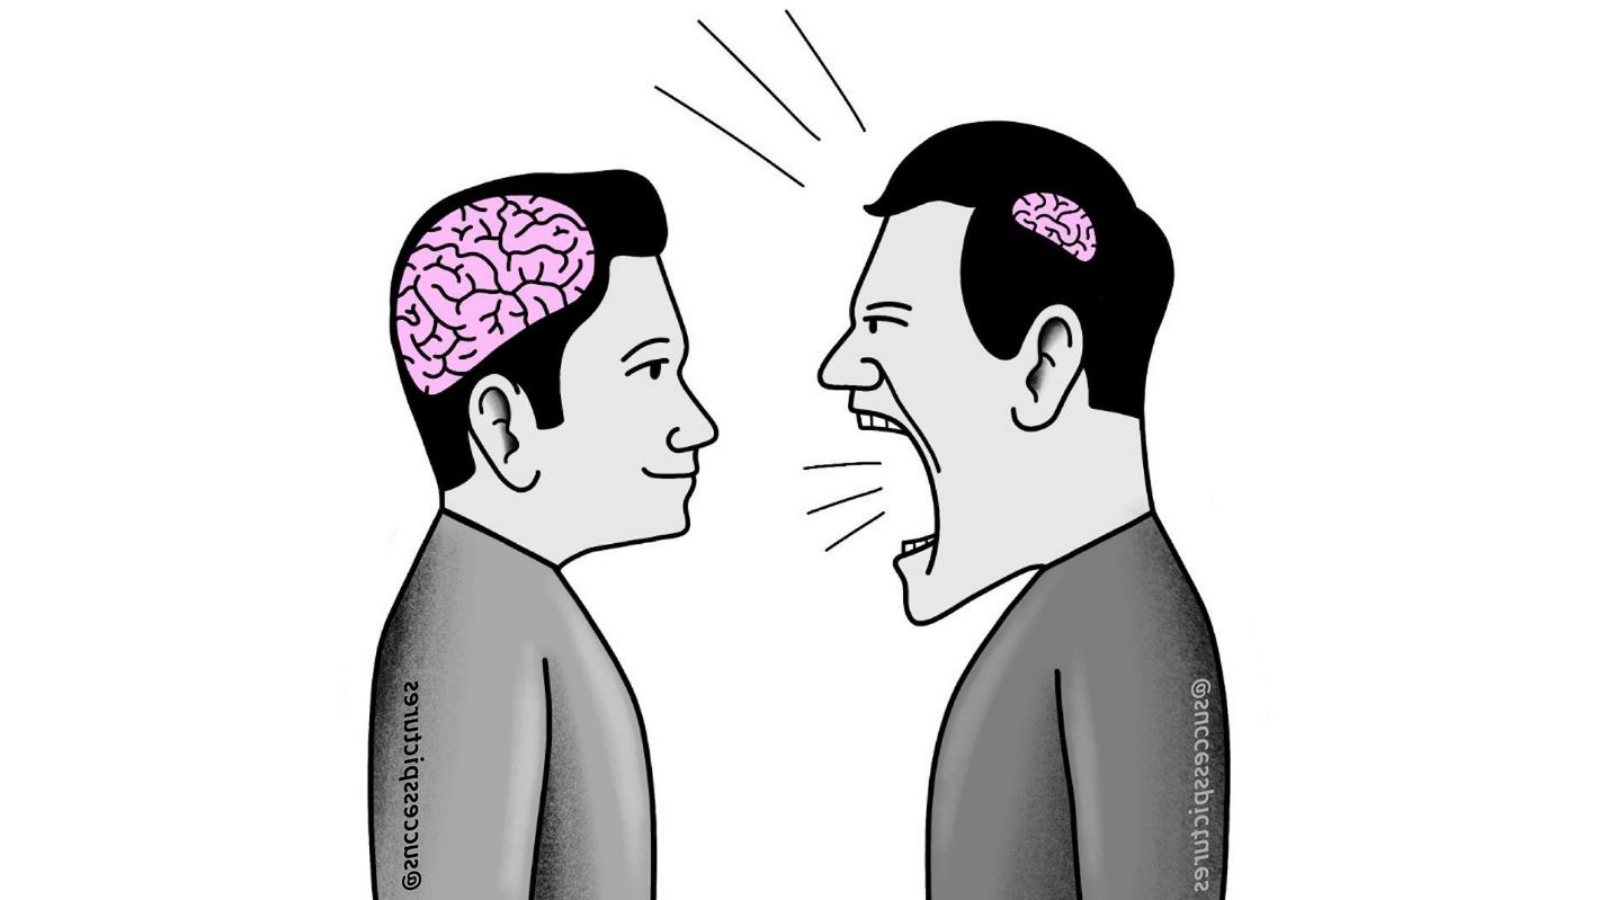 big brain vs small brain Blank Template Imgflip